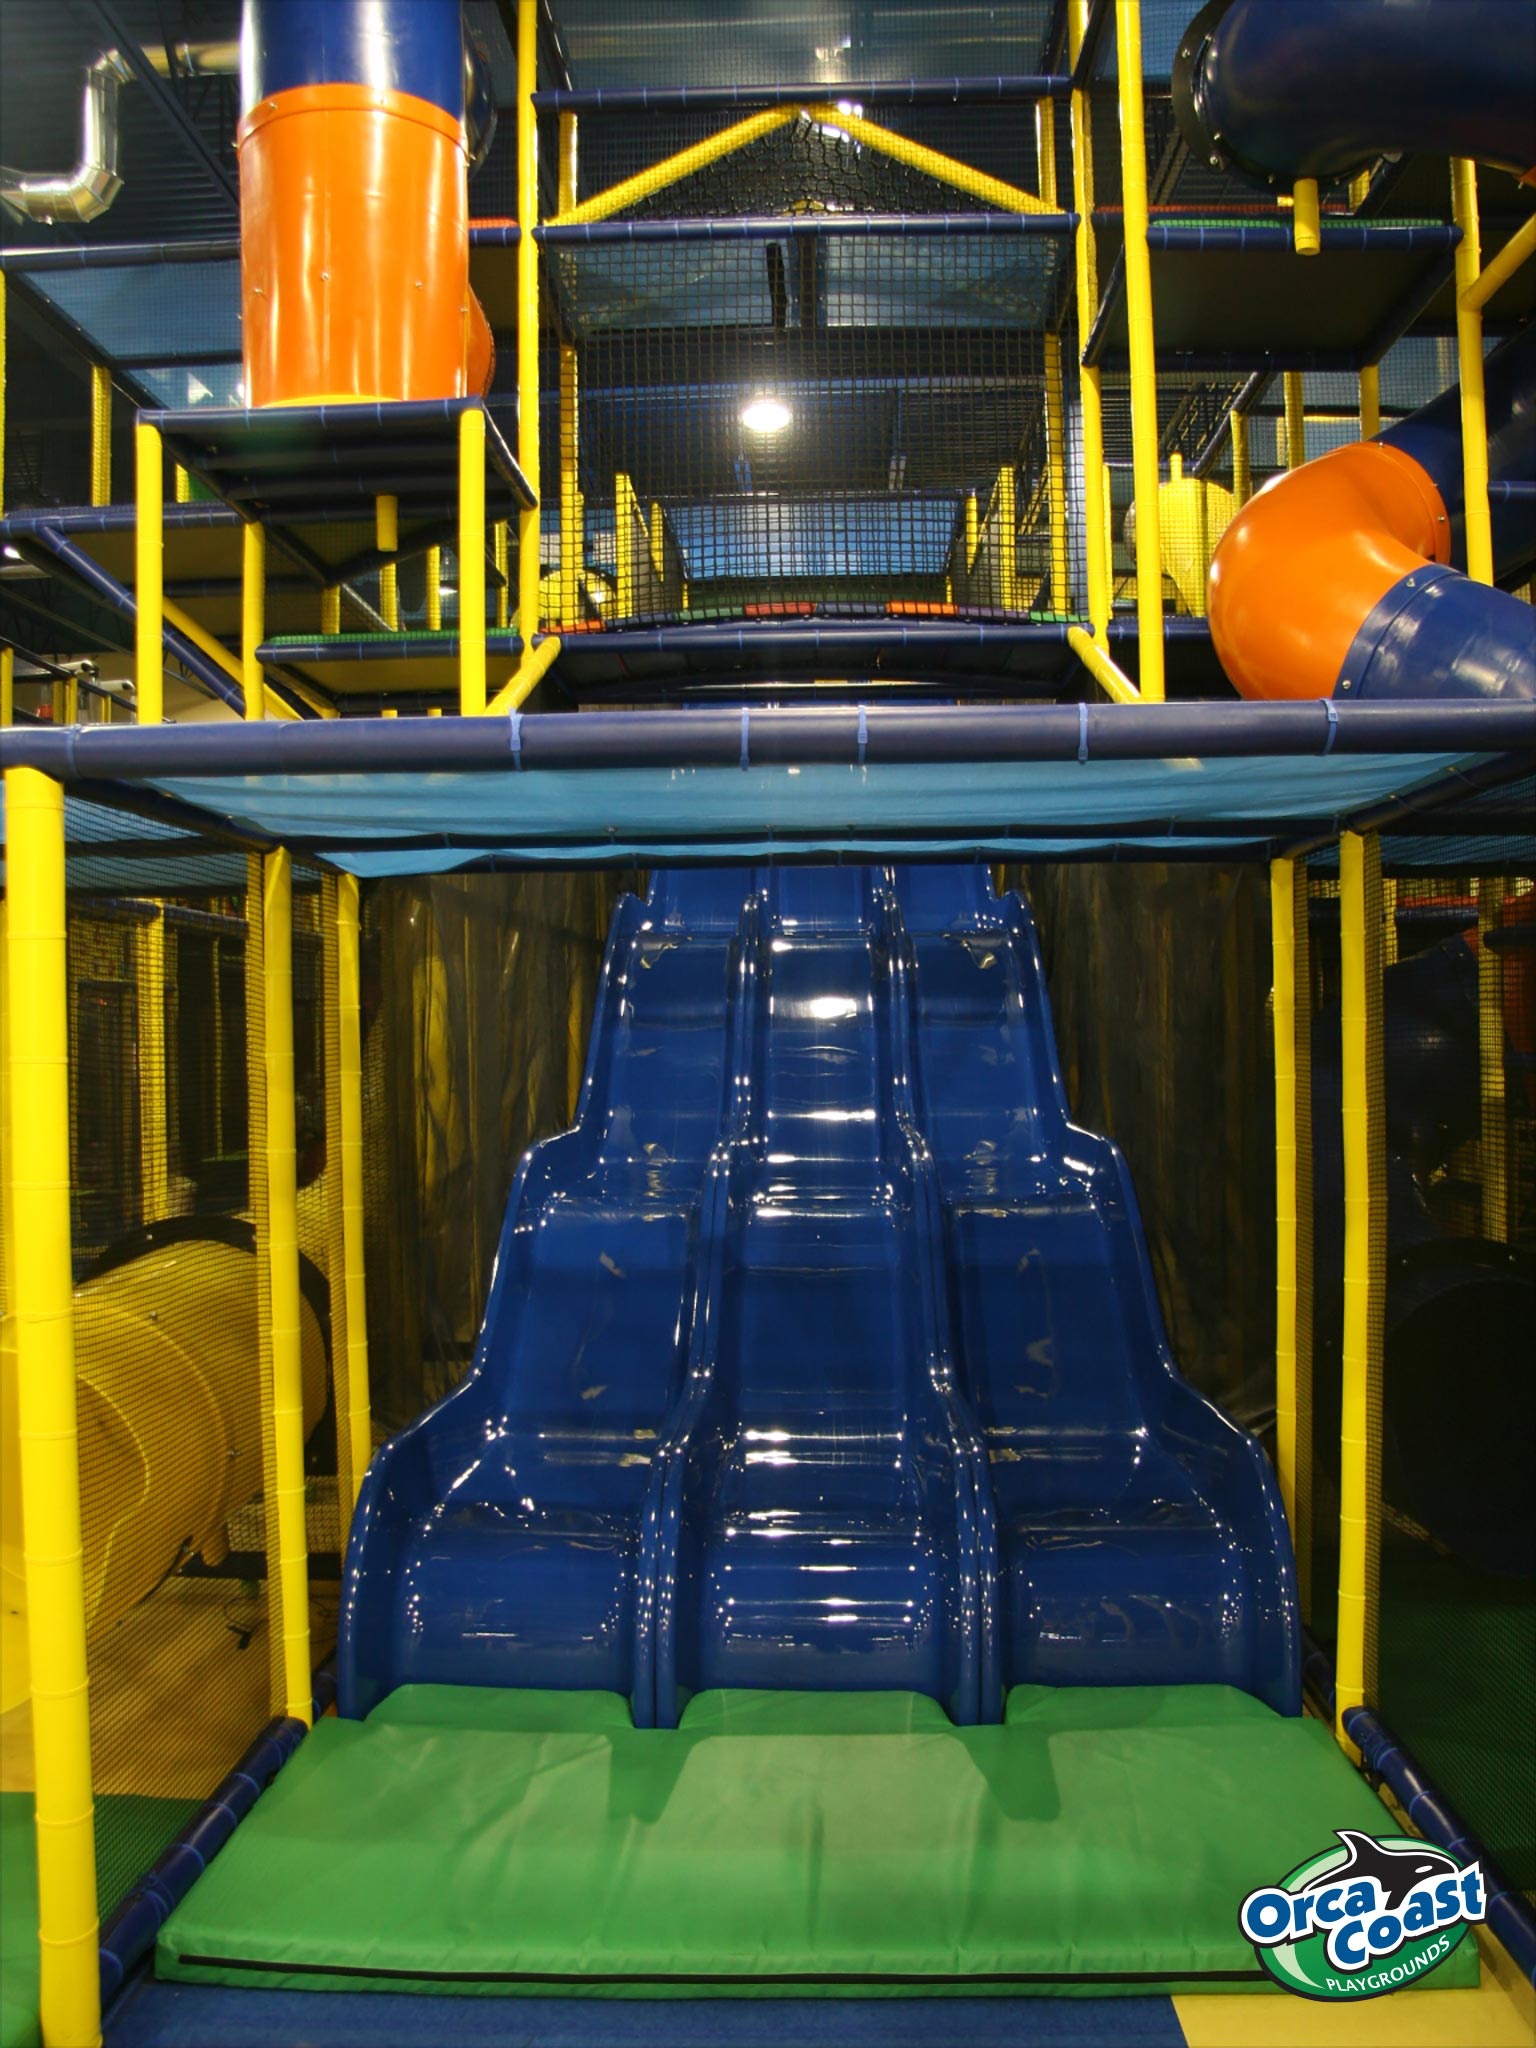 RecreoFun Family Entertainment Center Indoor Playground slide